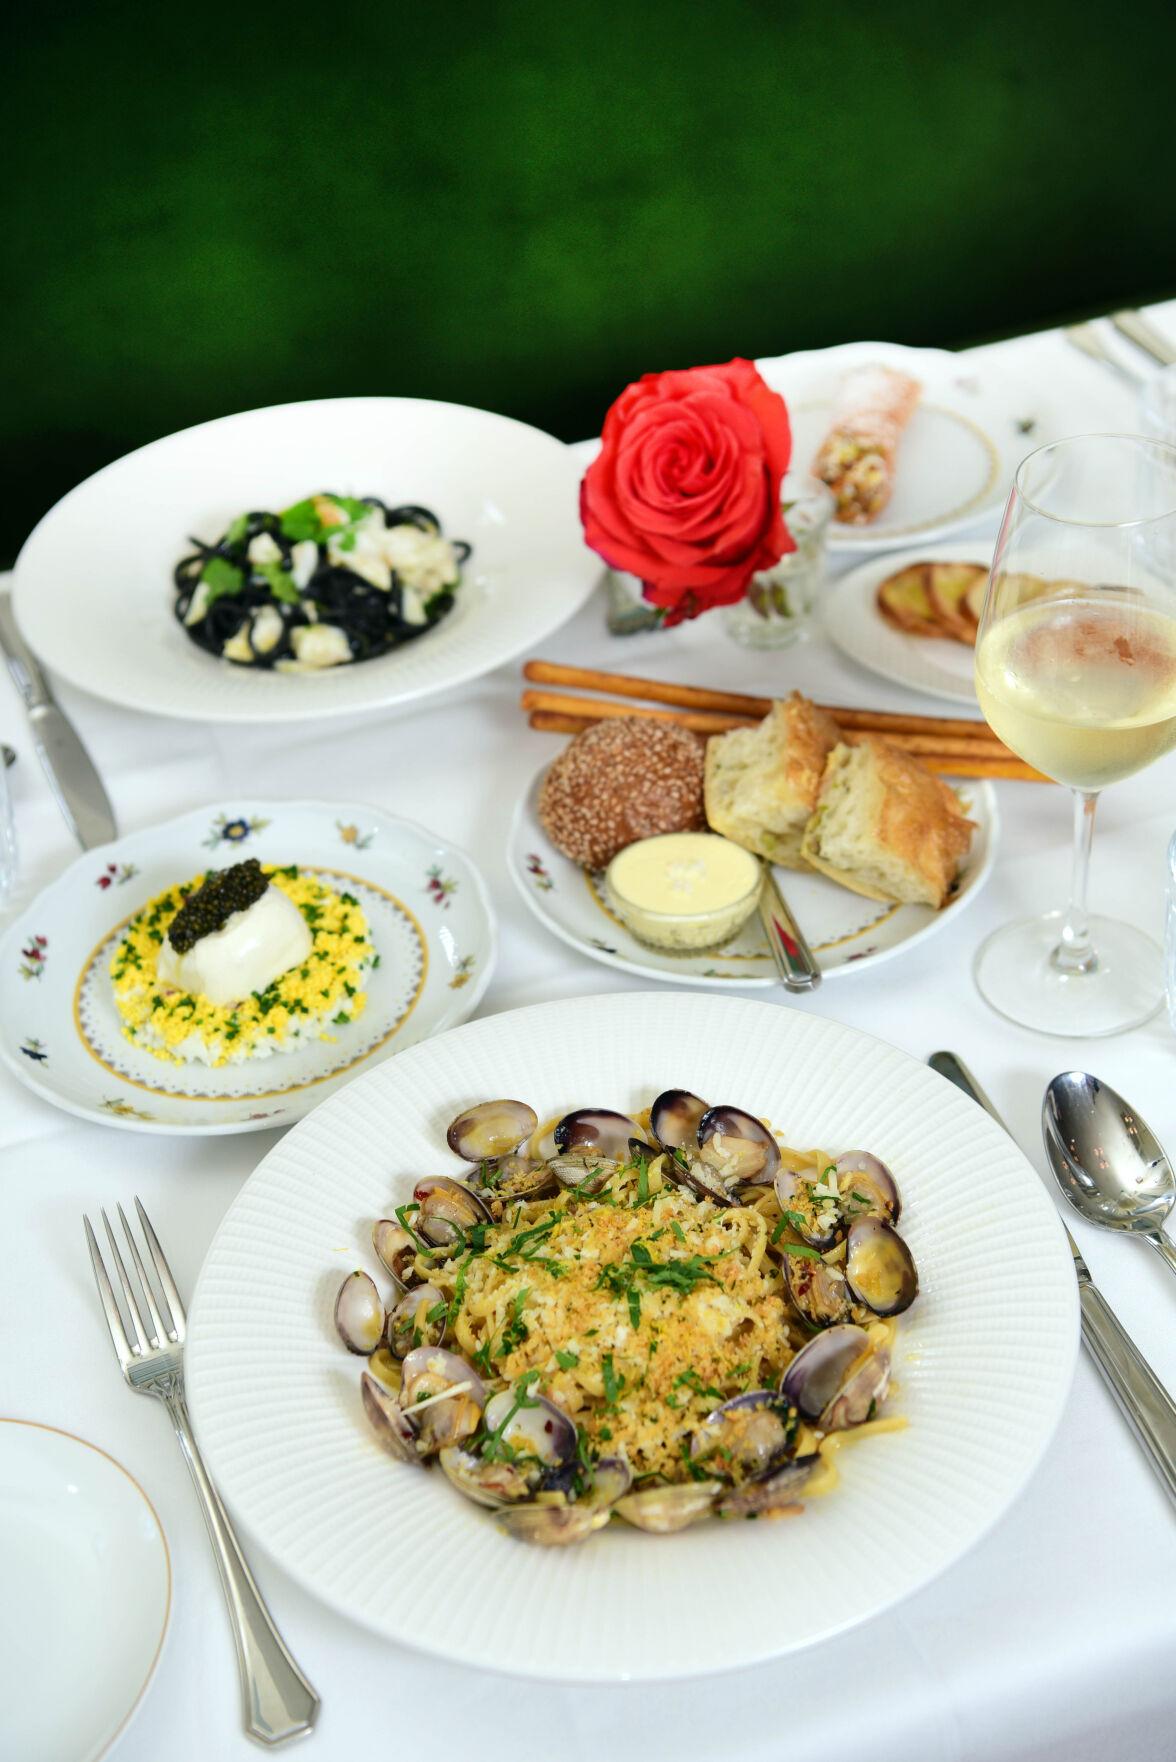 San Lorenzo is an elegant new Italian restaurant in the Lower Garden